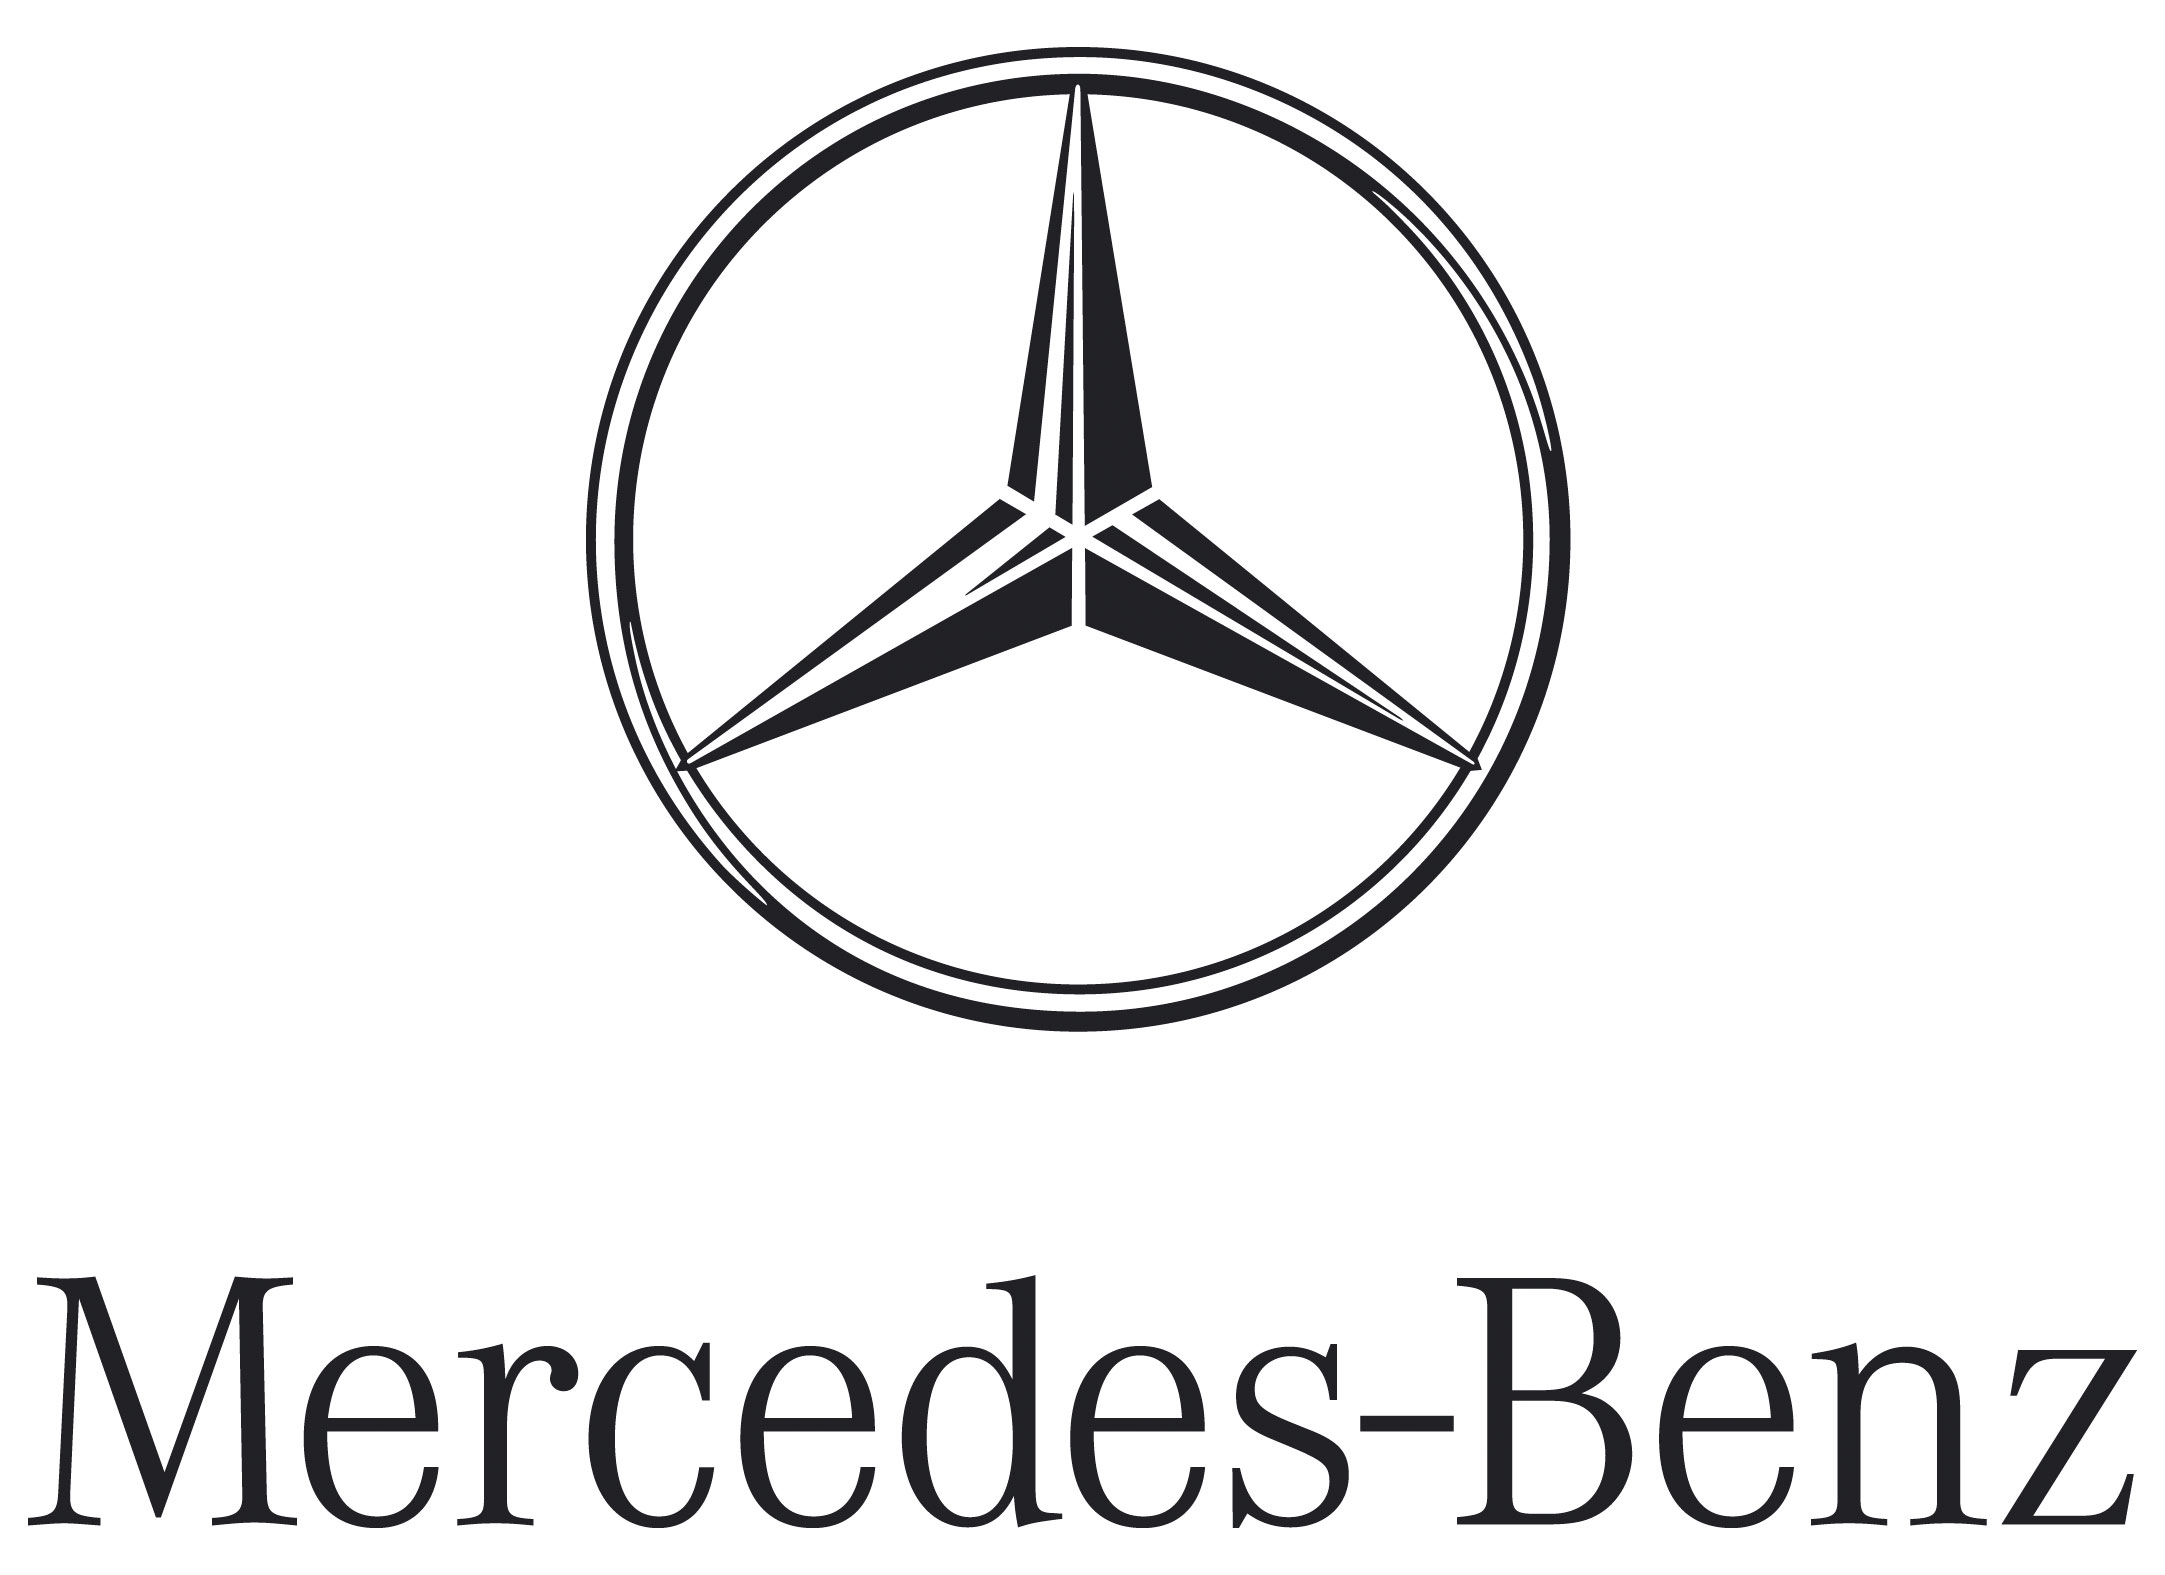 Mercedes Benz – Vagas de Emprego em 2011 Cadastro de Currículo